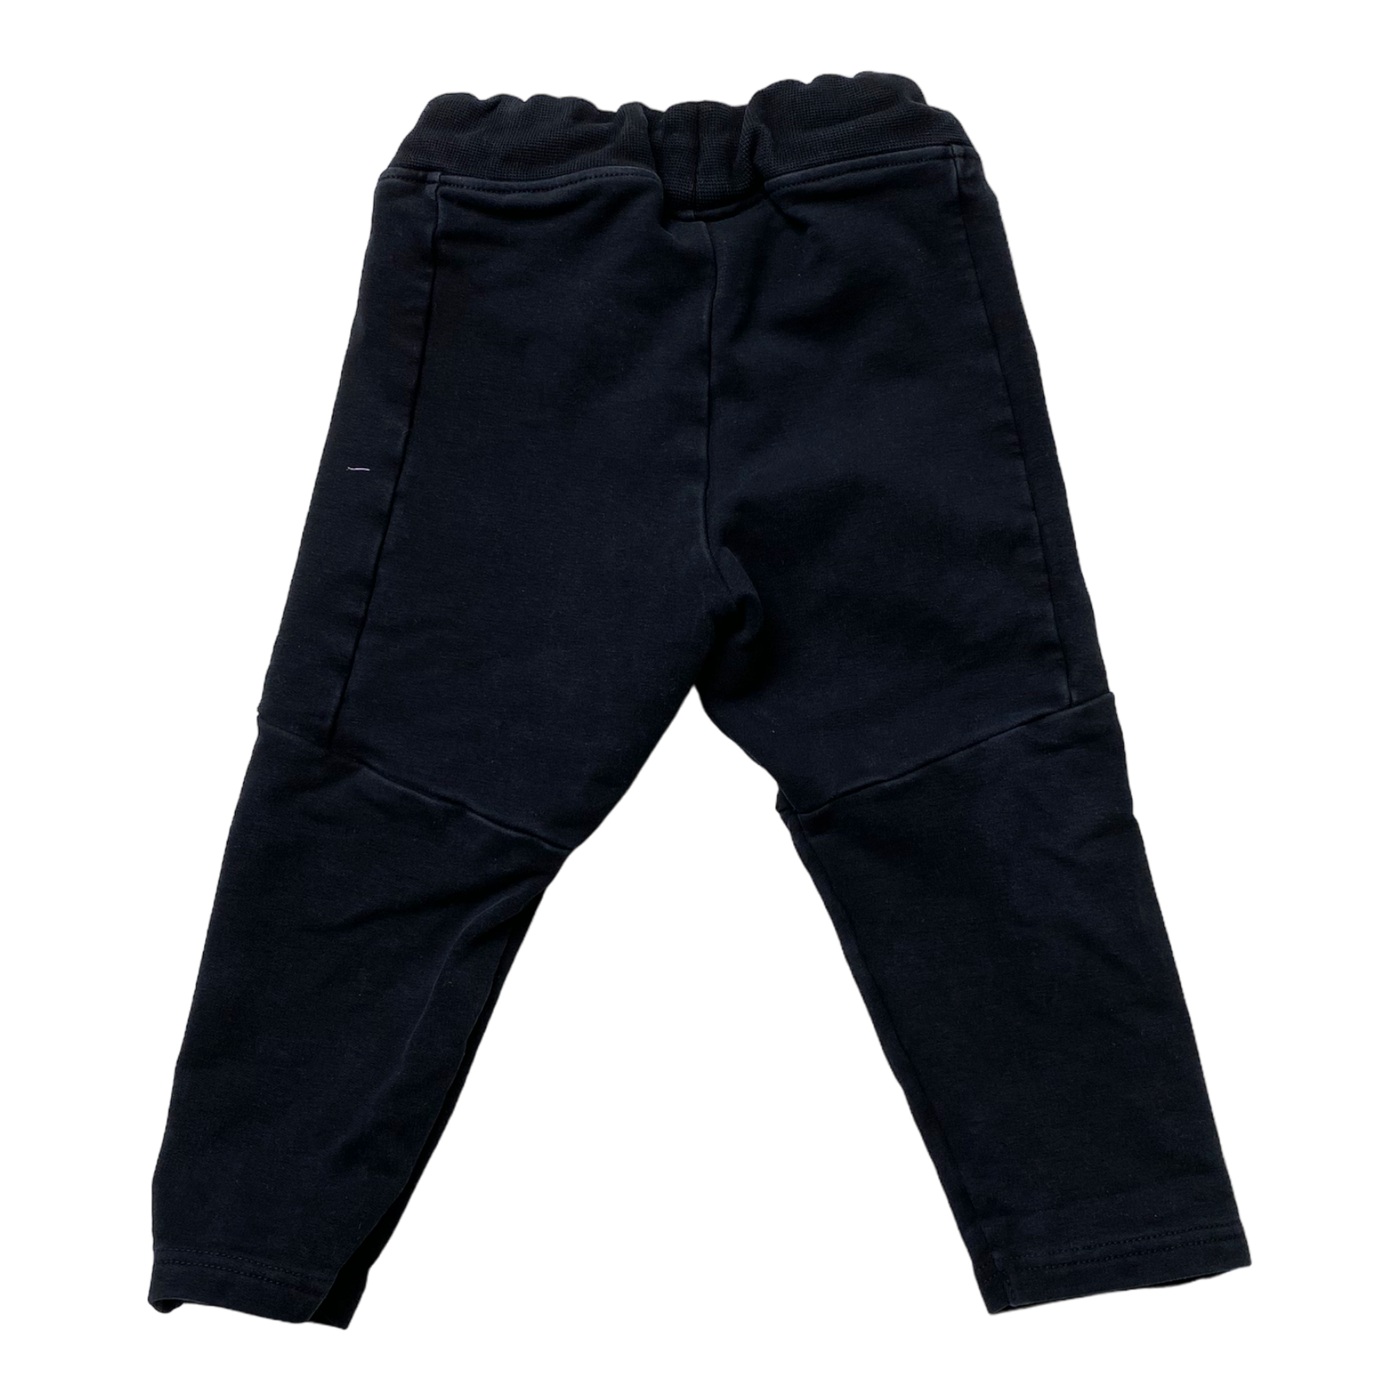 Gugguu sweatpants, black | 86cm